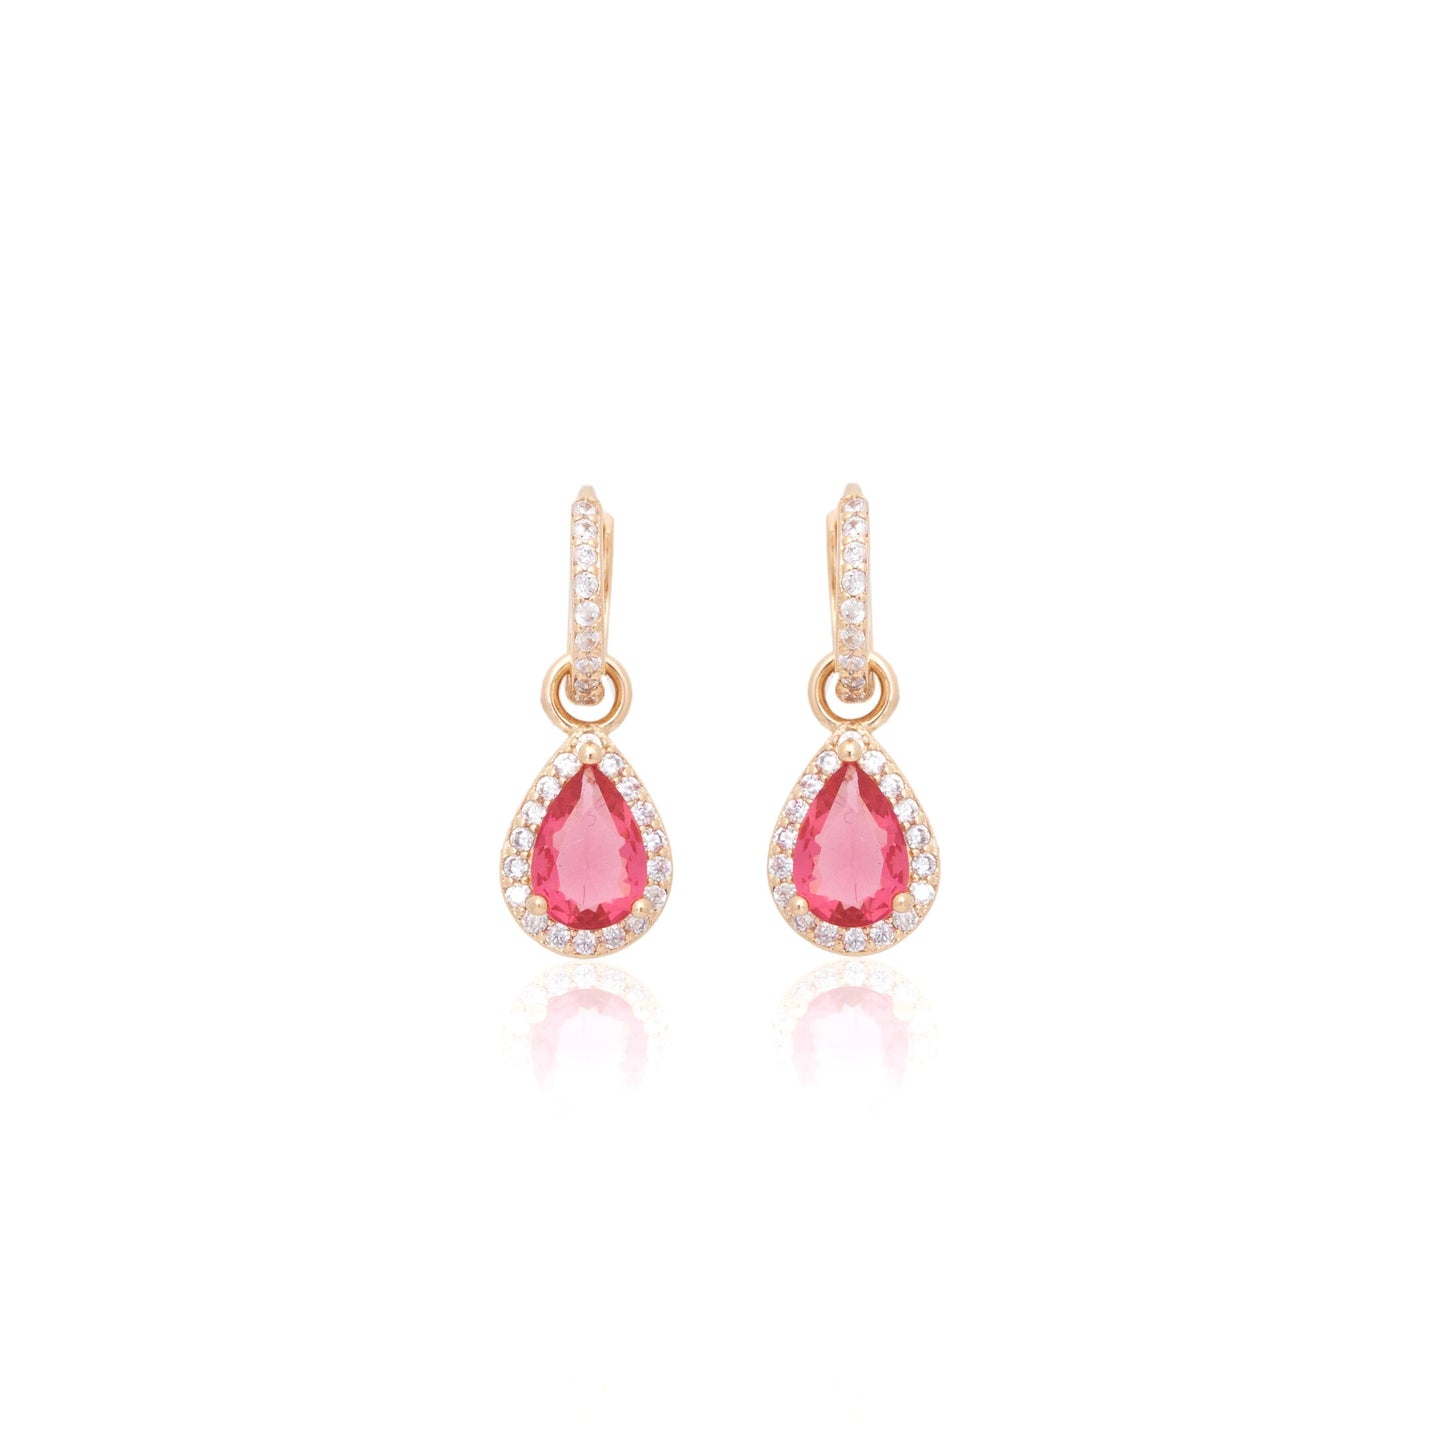 Hoop earring with pink tourmaline drop